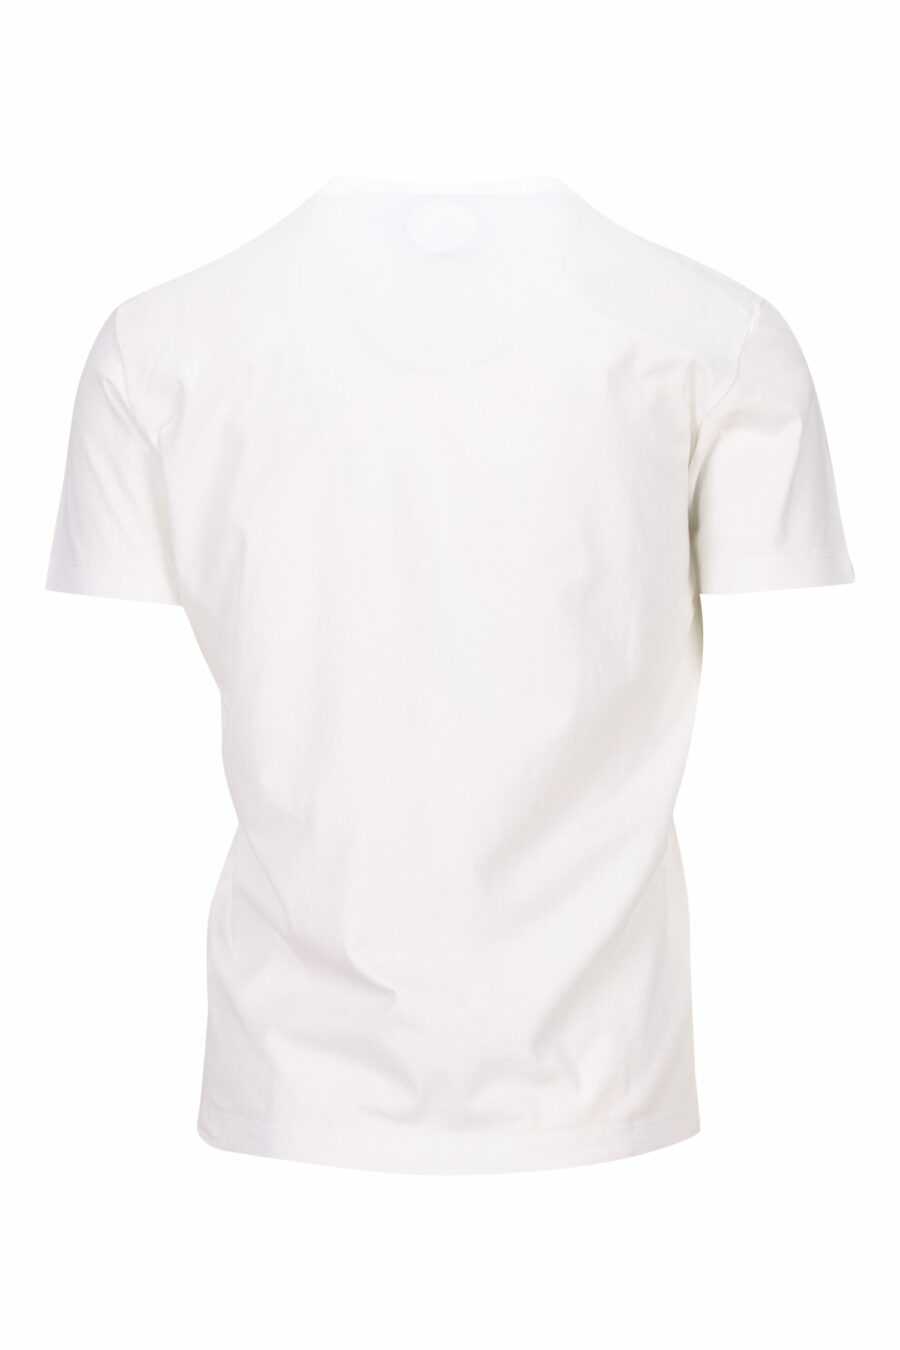 Camiseta blanca con logo en placa pequeña - 8054148404369 1 scaled